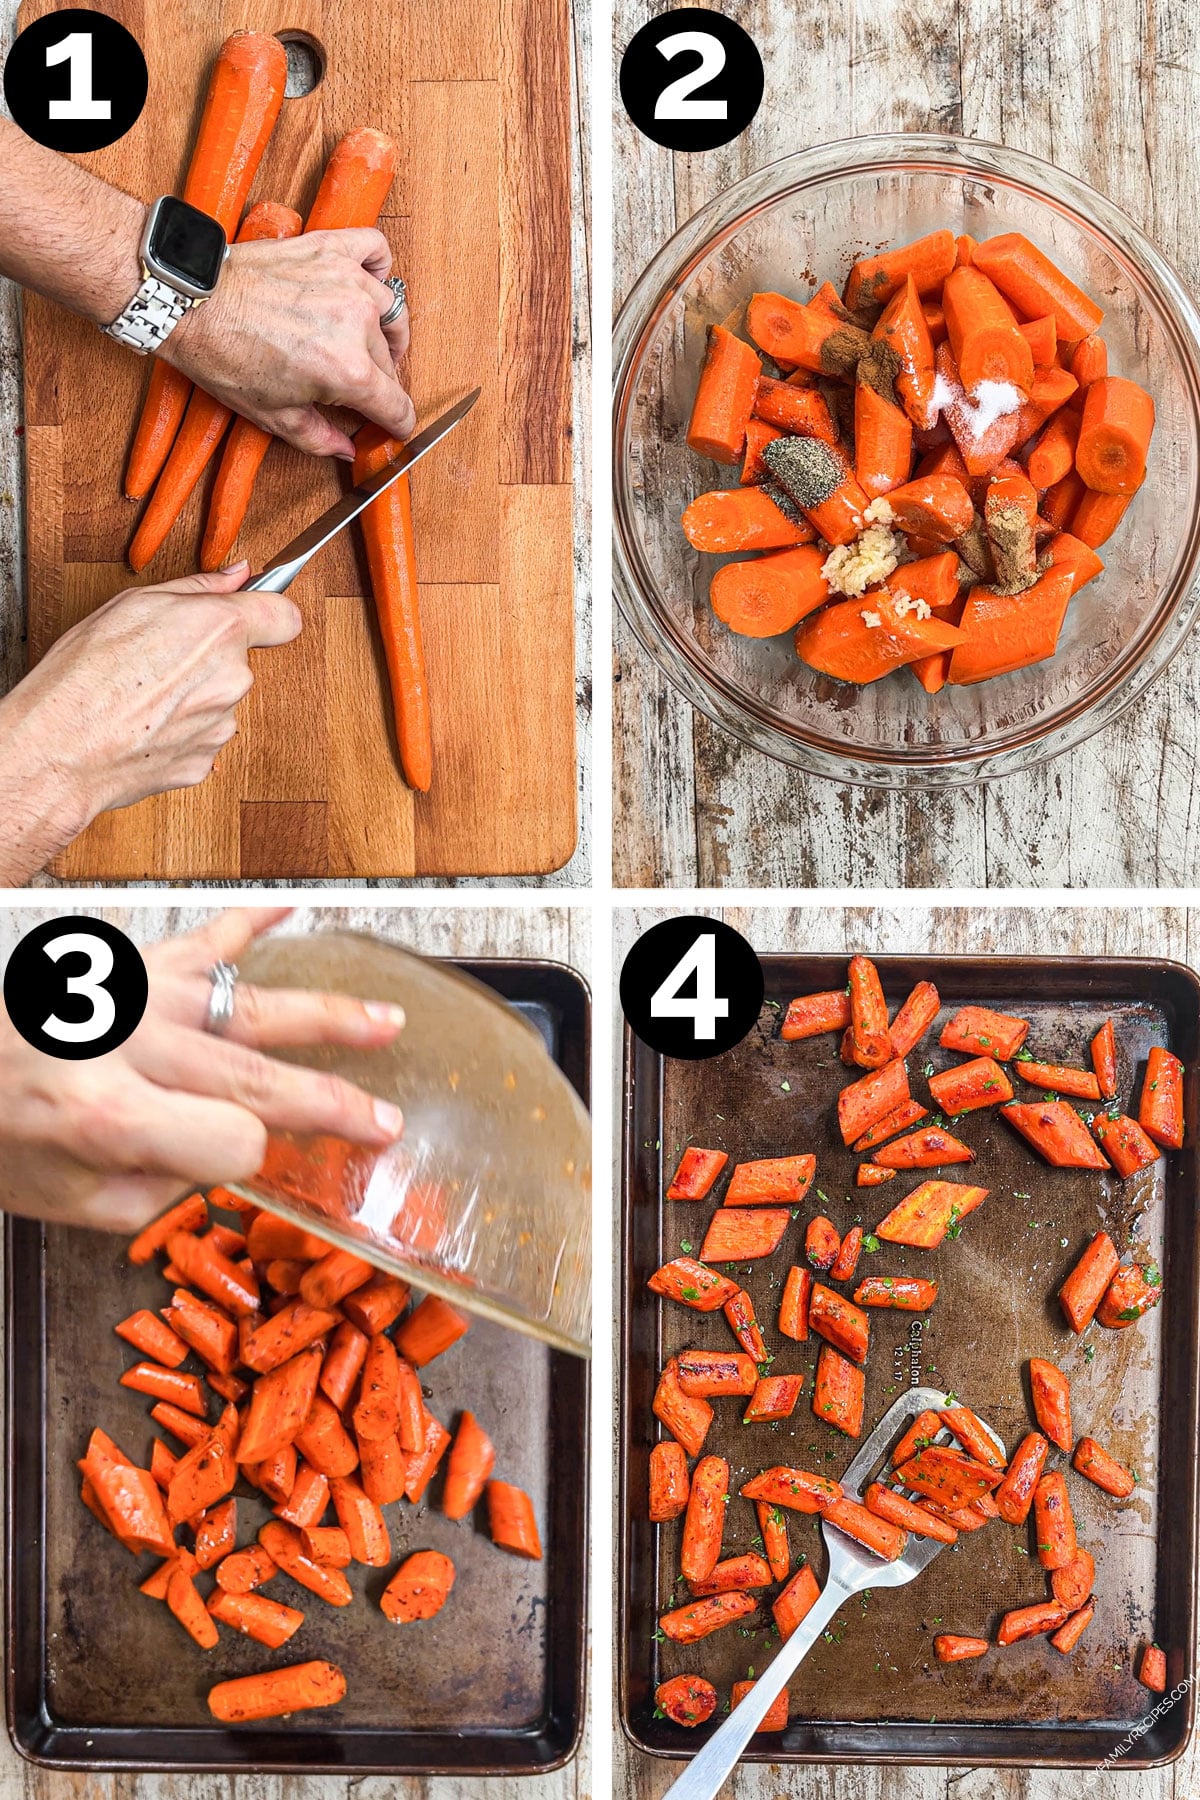 How to make maple glazed carrots: 1) peel and cut the carrots, 2) season, 3) spread onto pan, 4) roast and garnish